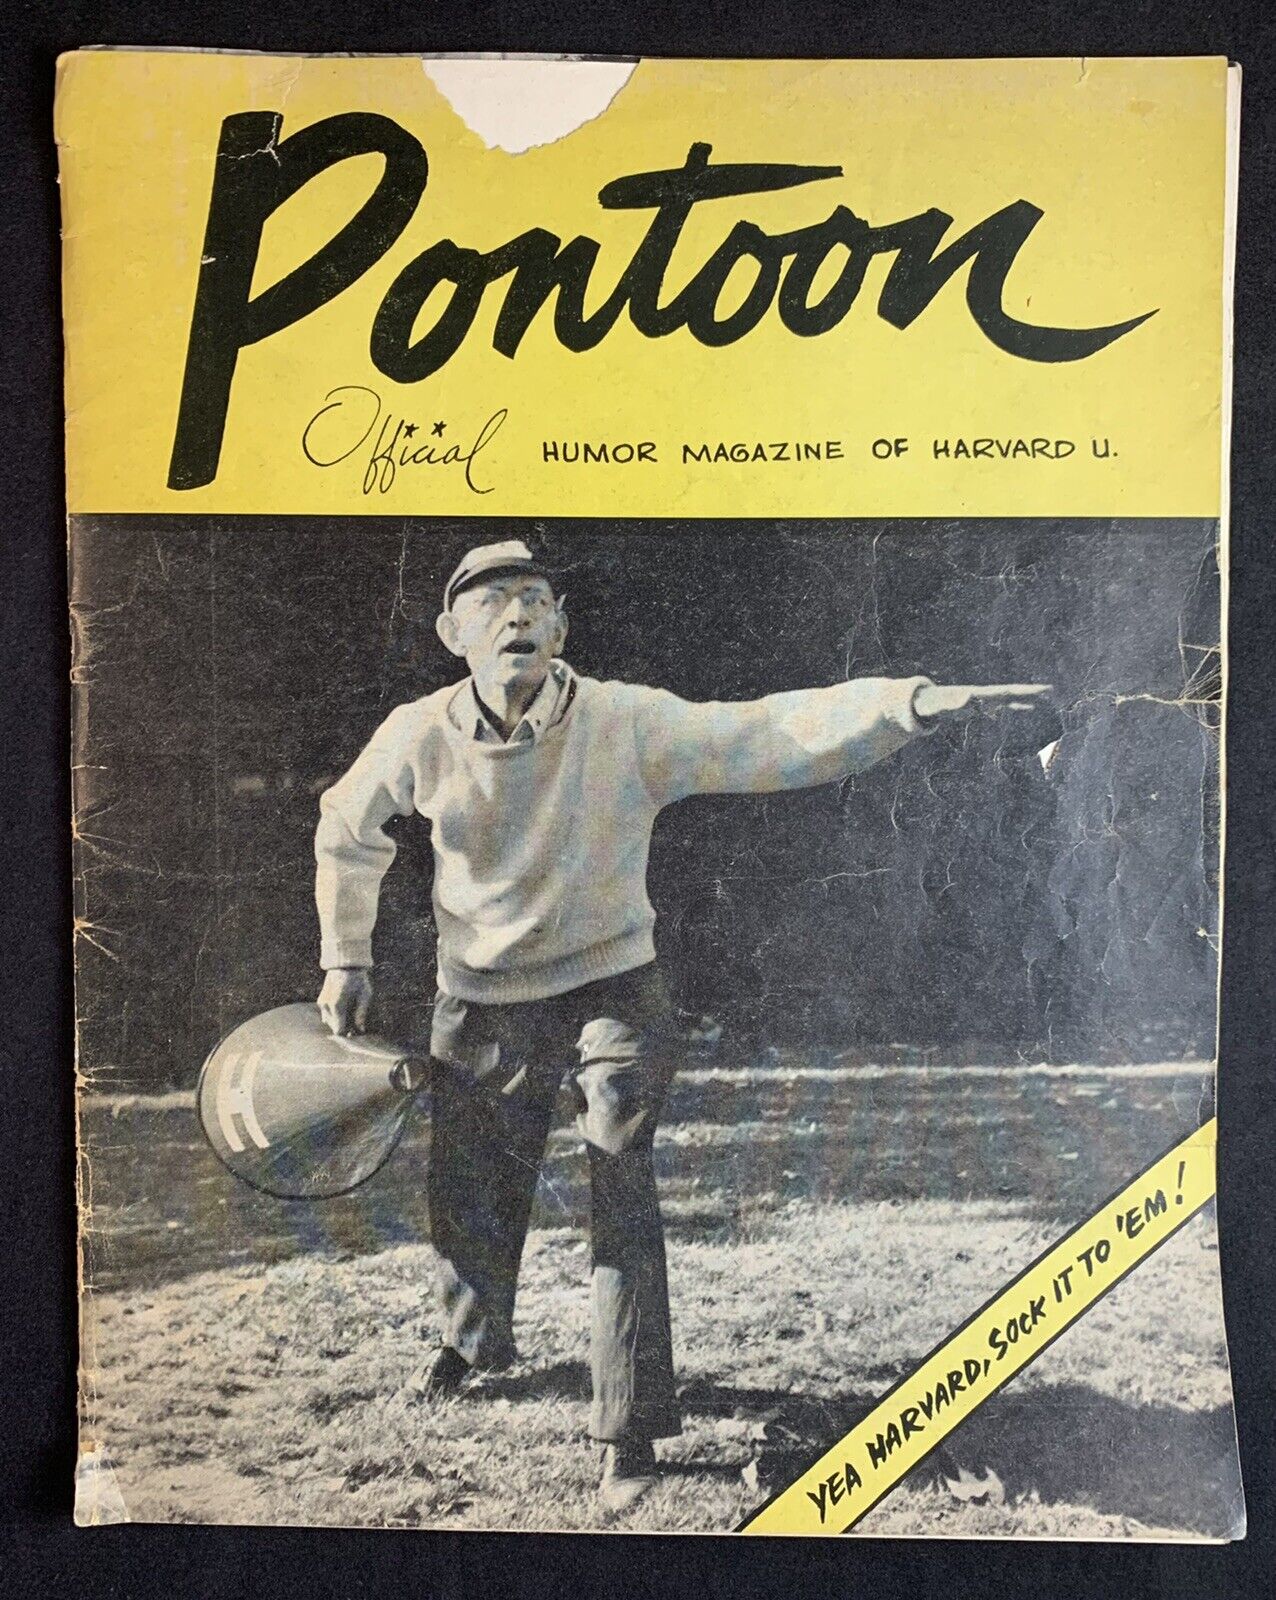 Pontoon Official Humor Magazine of Harvard University (1950)